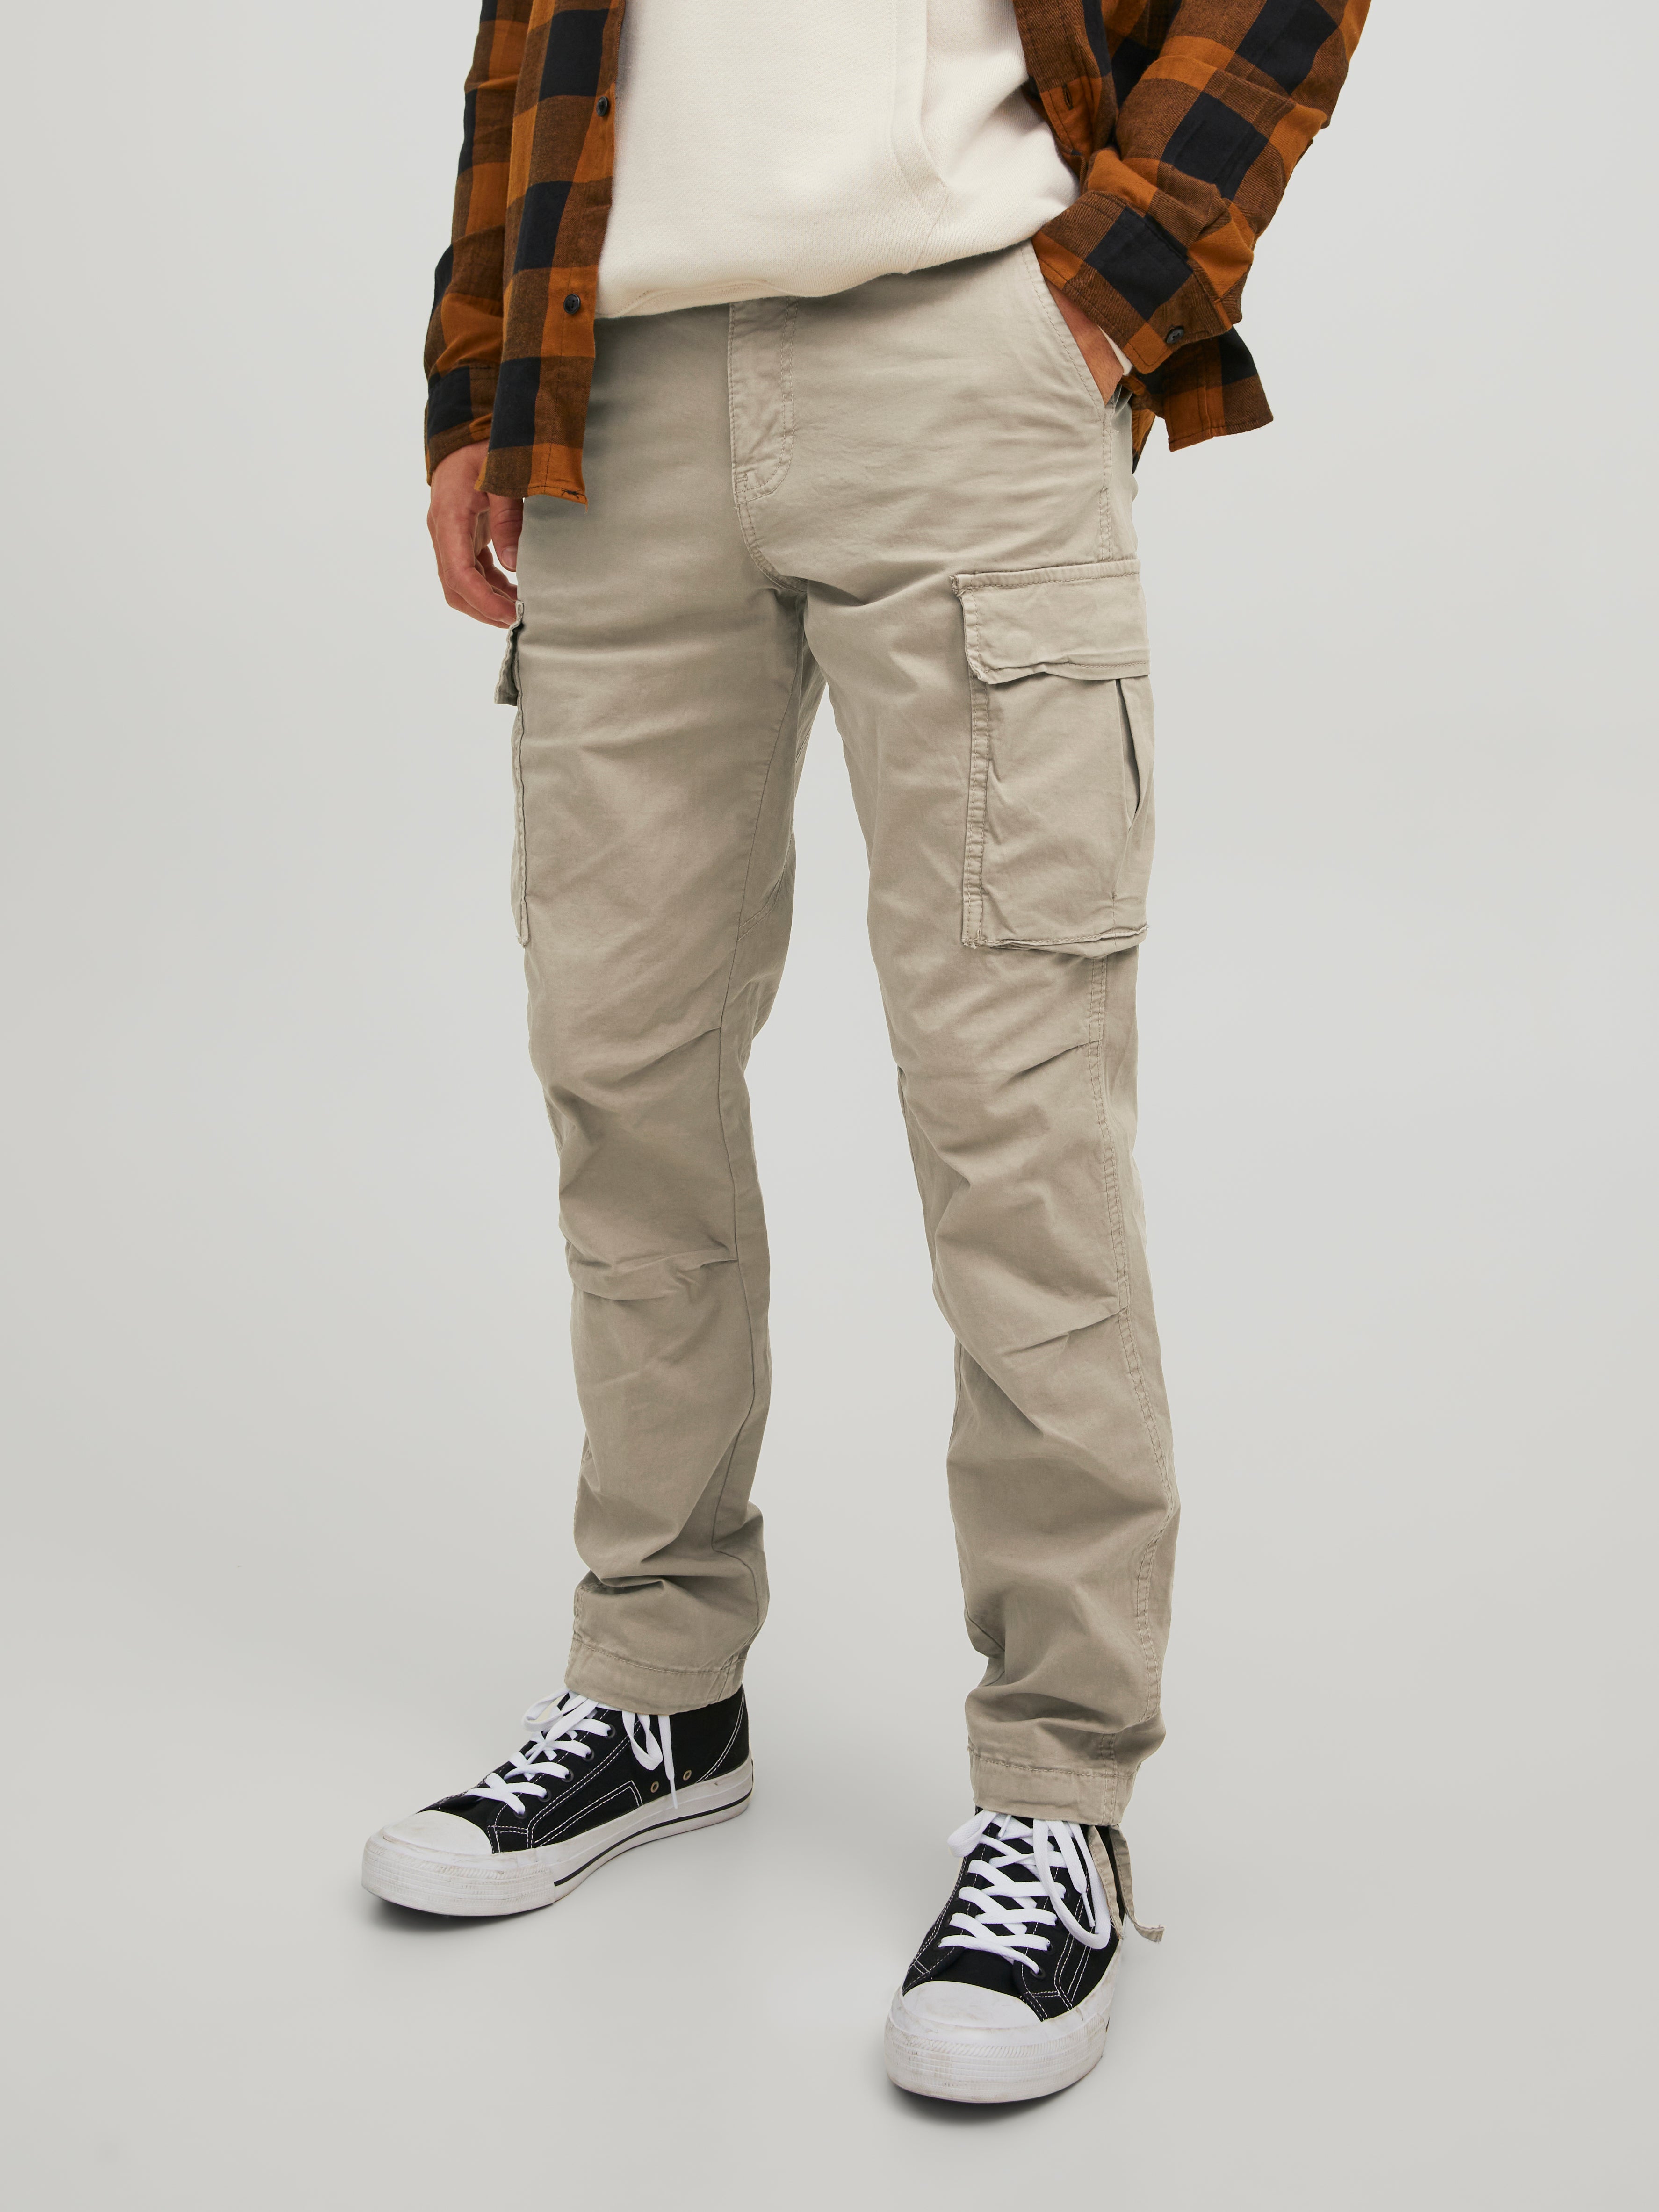 Men's Trousers from Jack & Jones in plus sizes | HIRMER big & tall